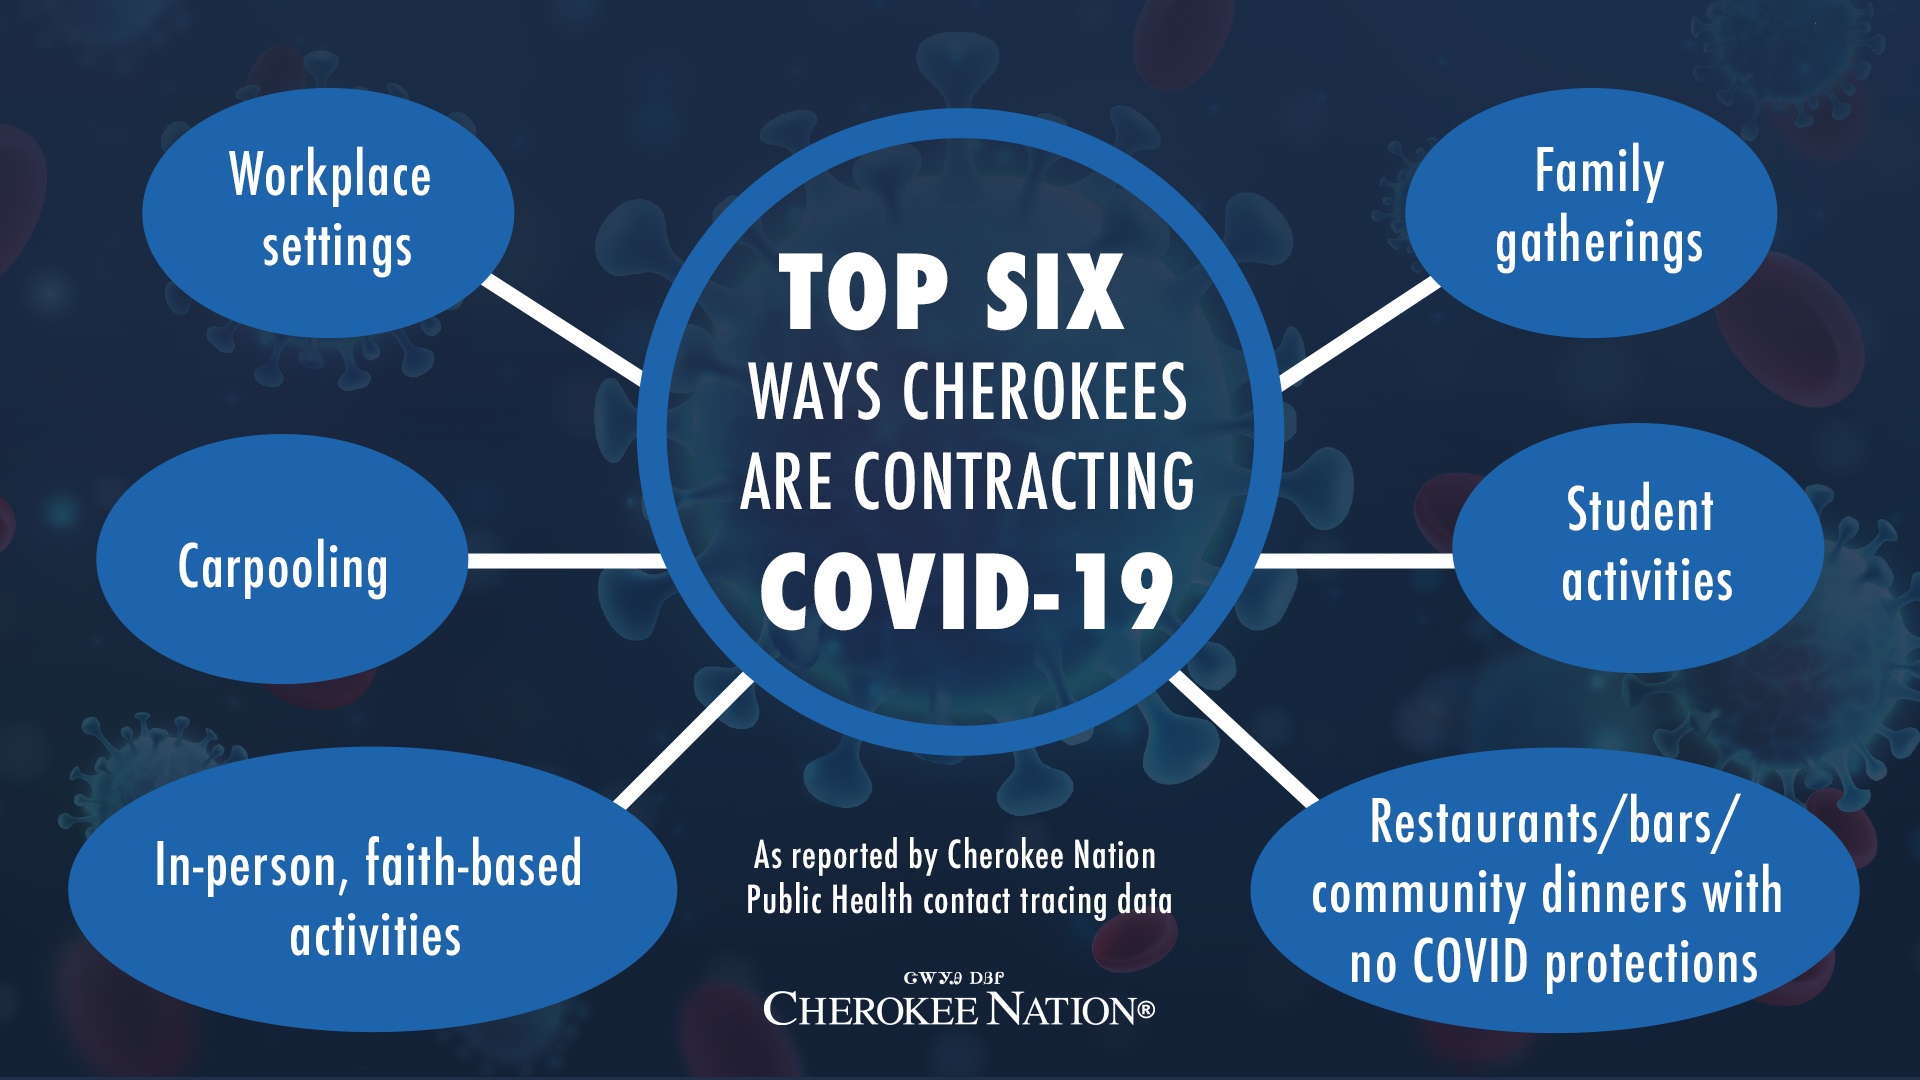 Top Six Ways Cherokees Contracting COVID